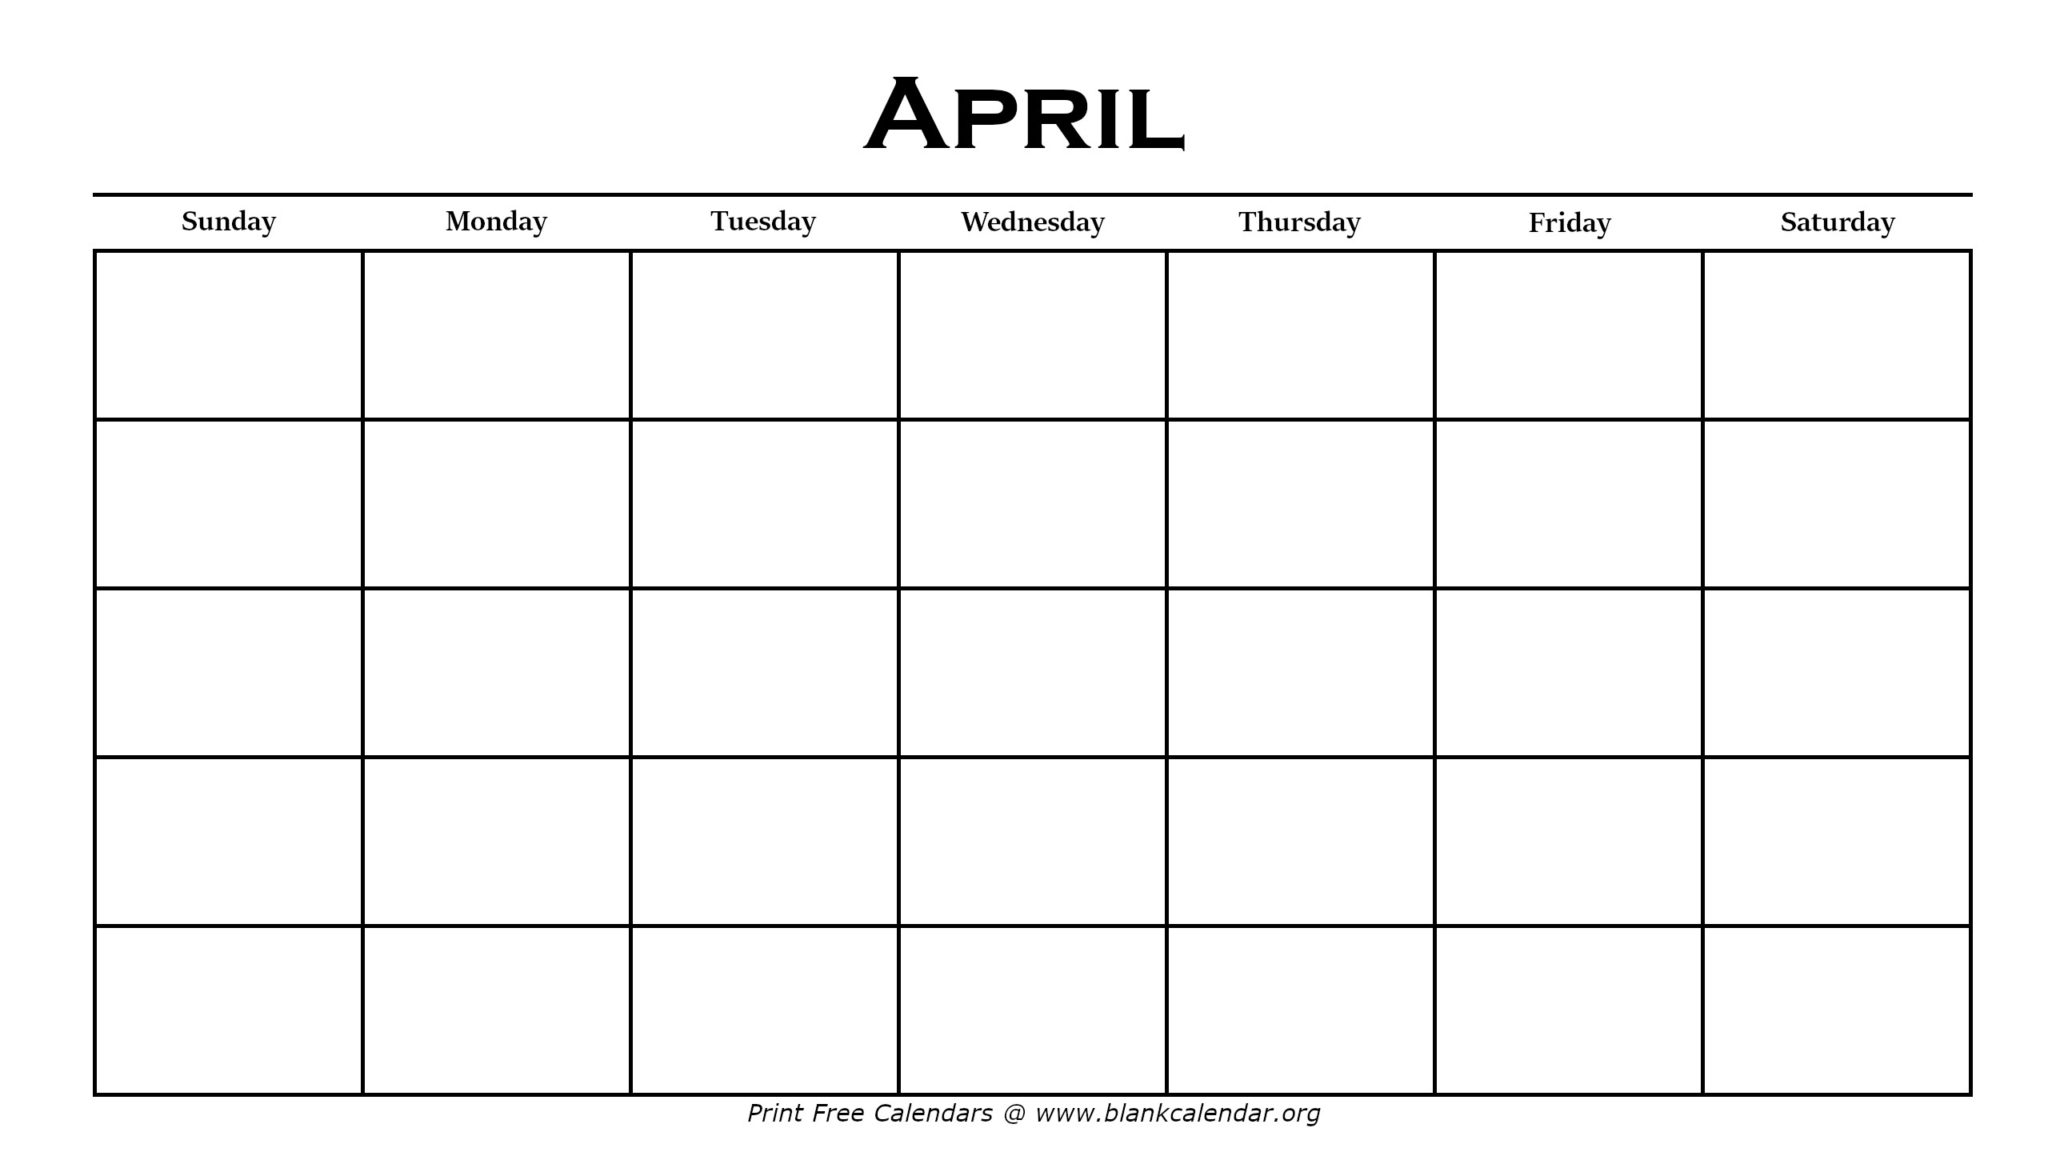 printable-april-calendars-blank-calendar